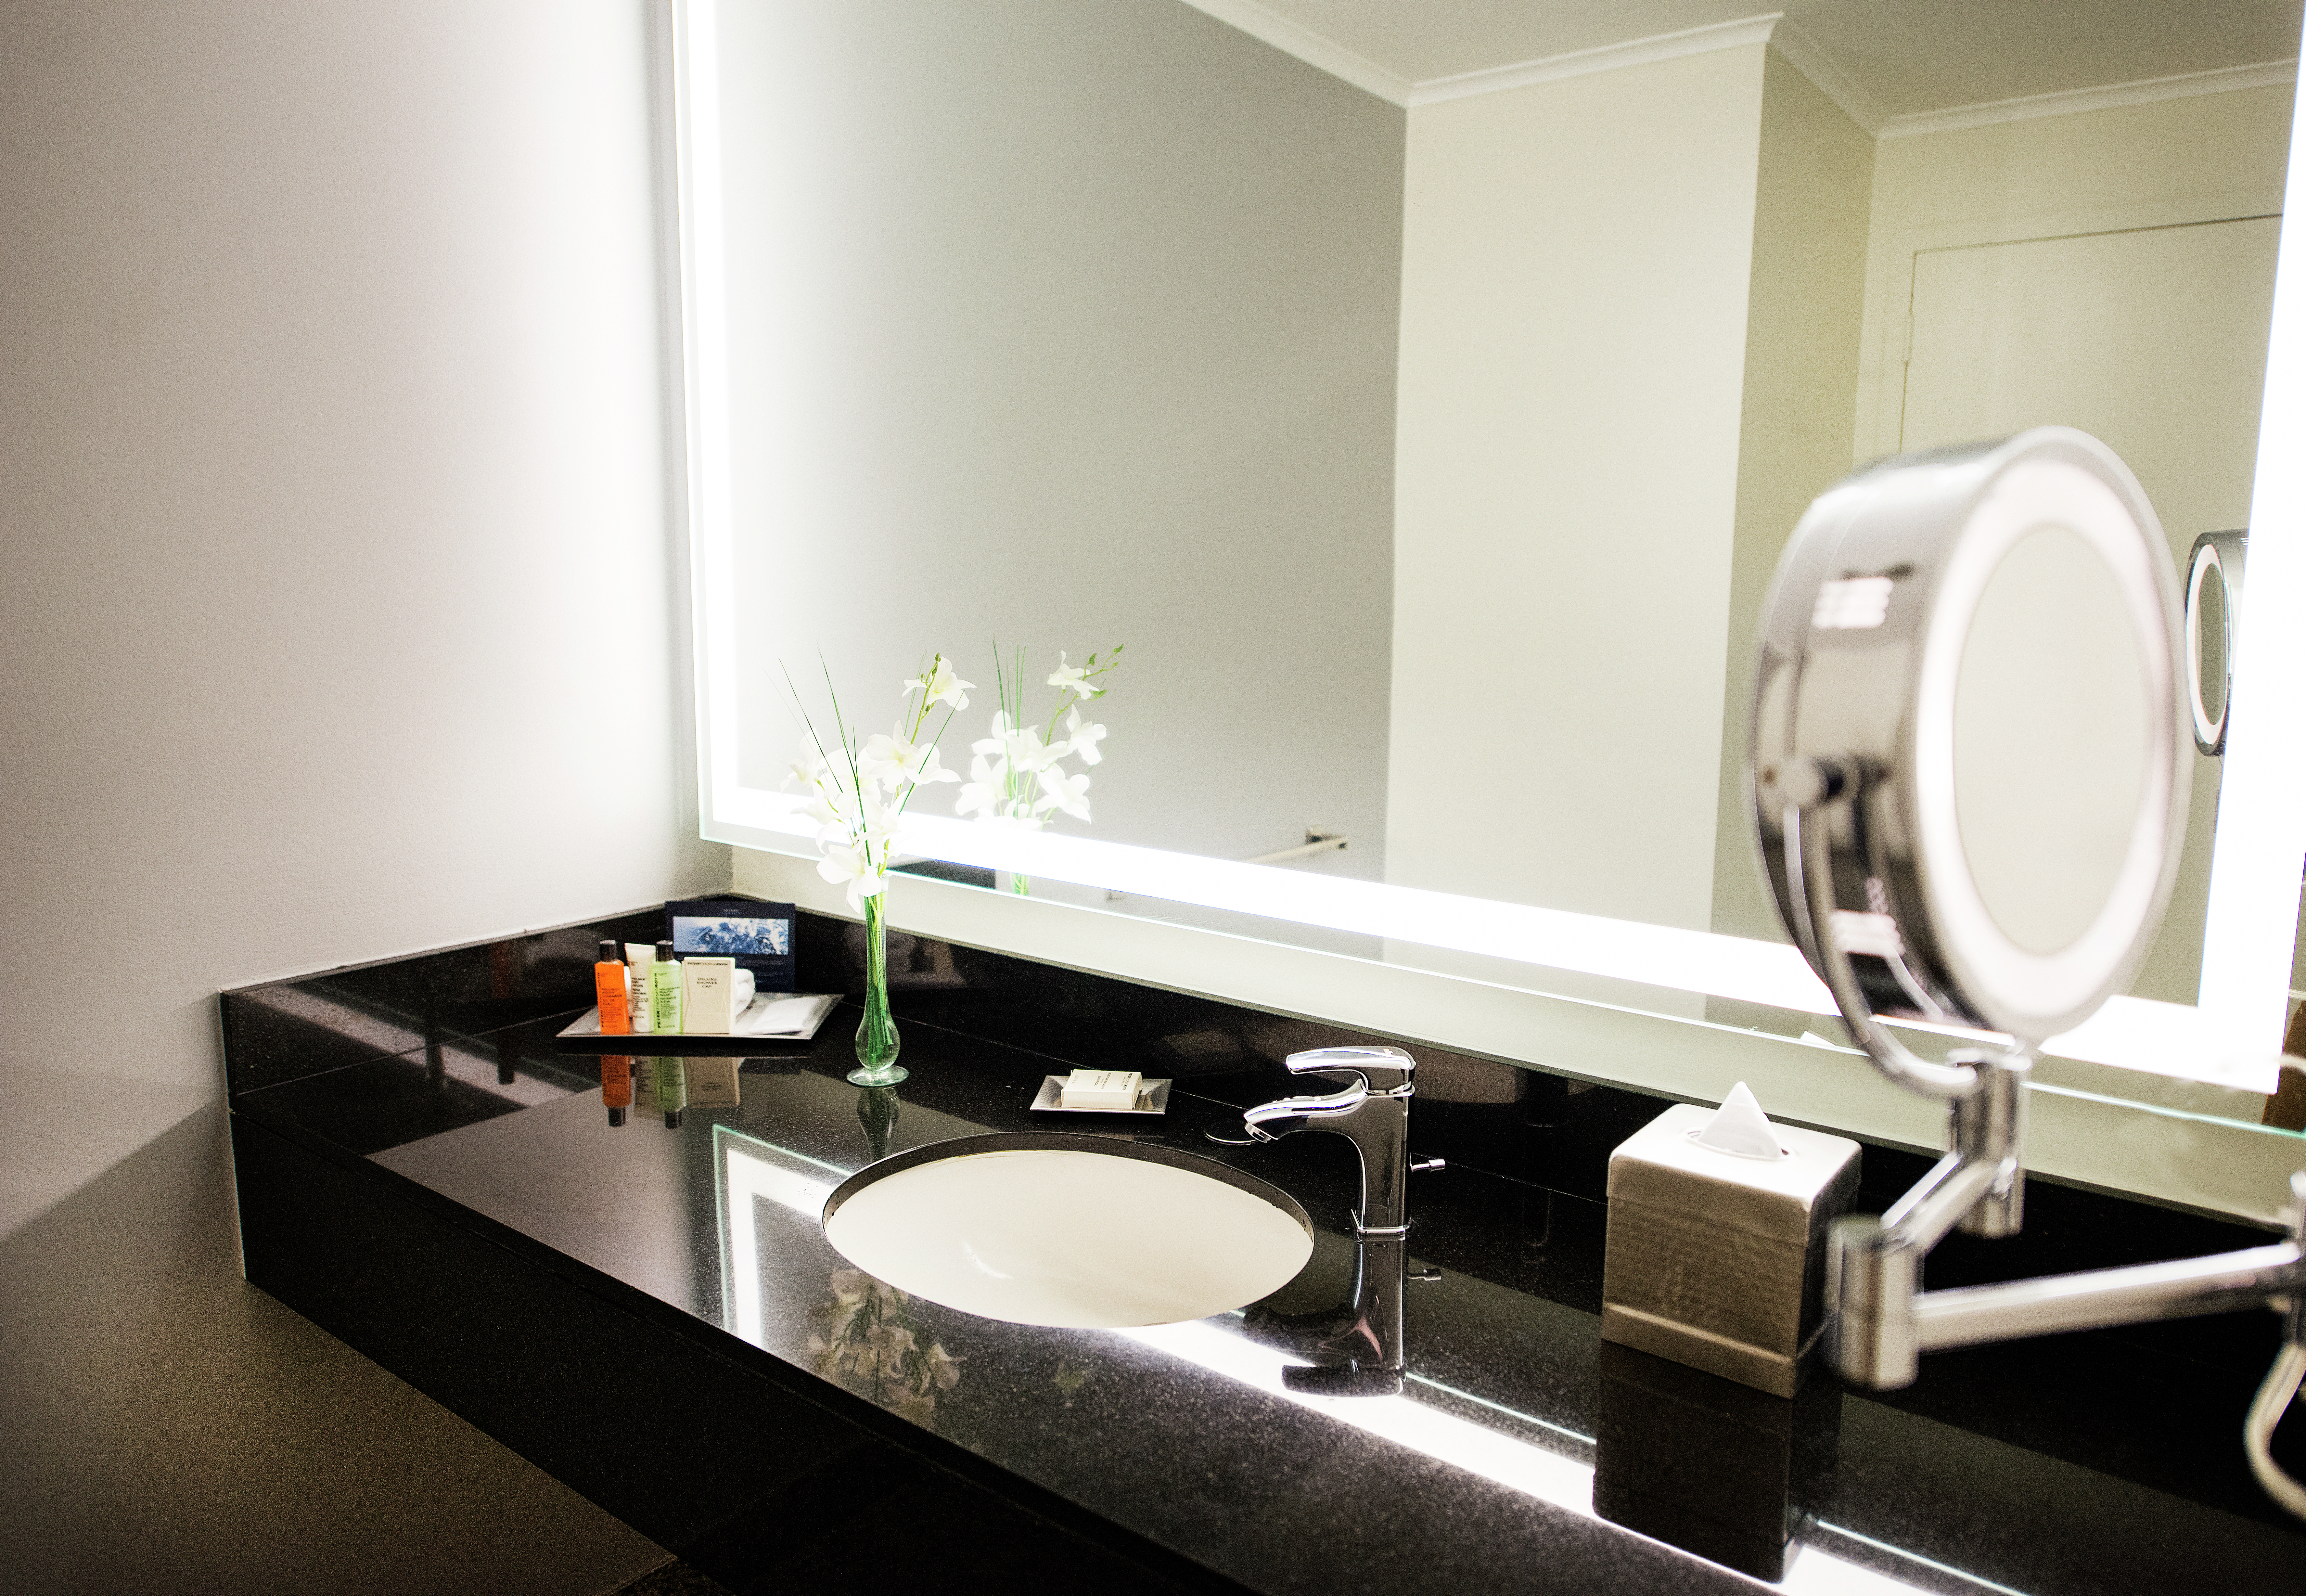 Executive Bathroom Vanity Area with Large Mirror